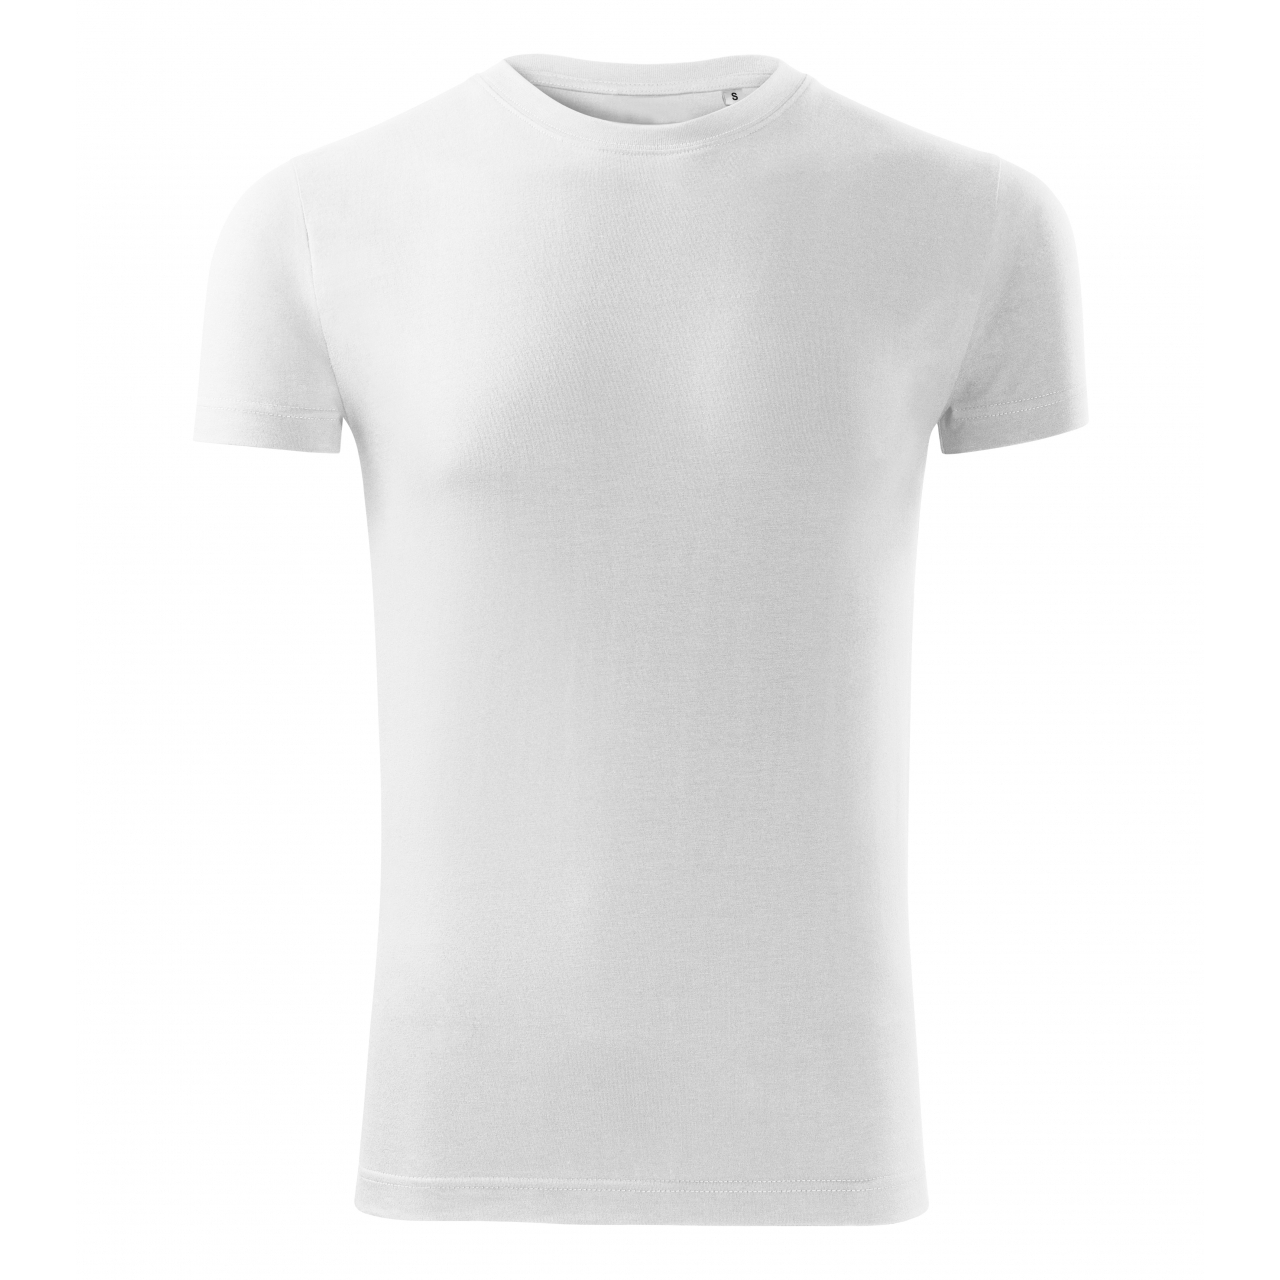 Tričko pánské Malfini Viper Free - bílé, XL